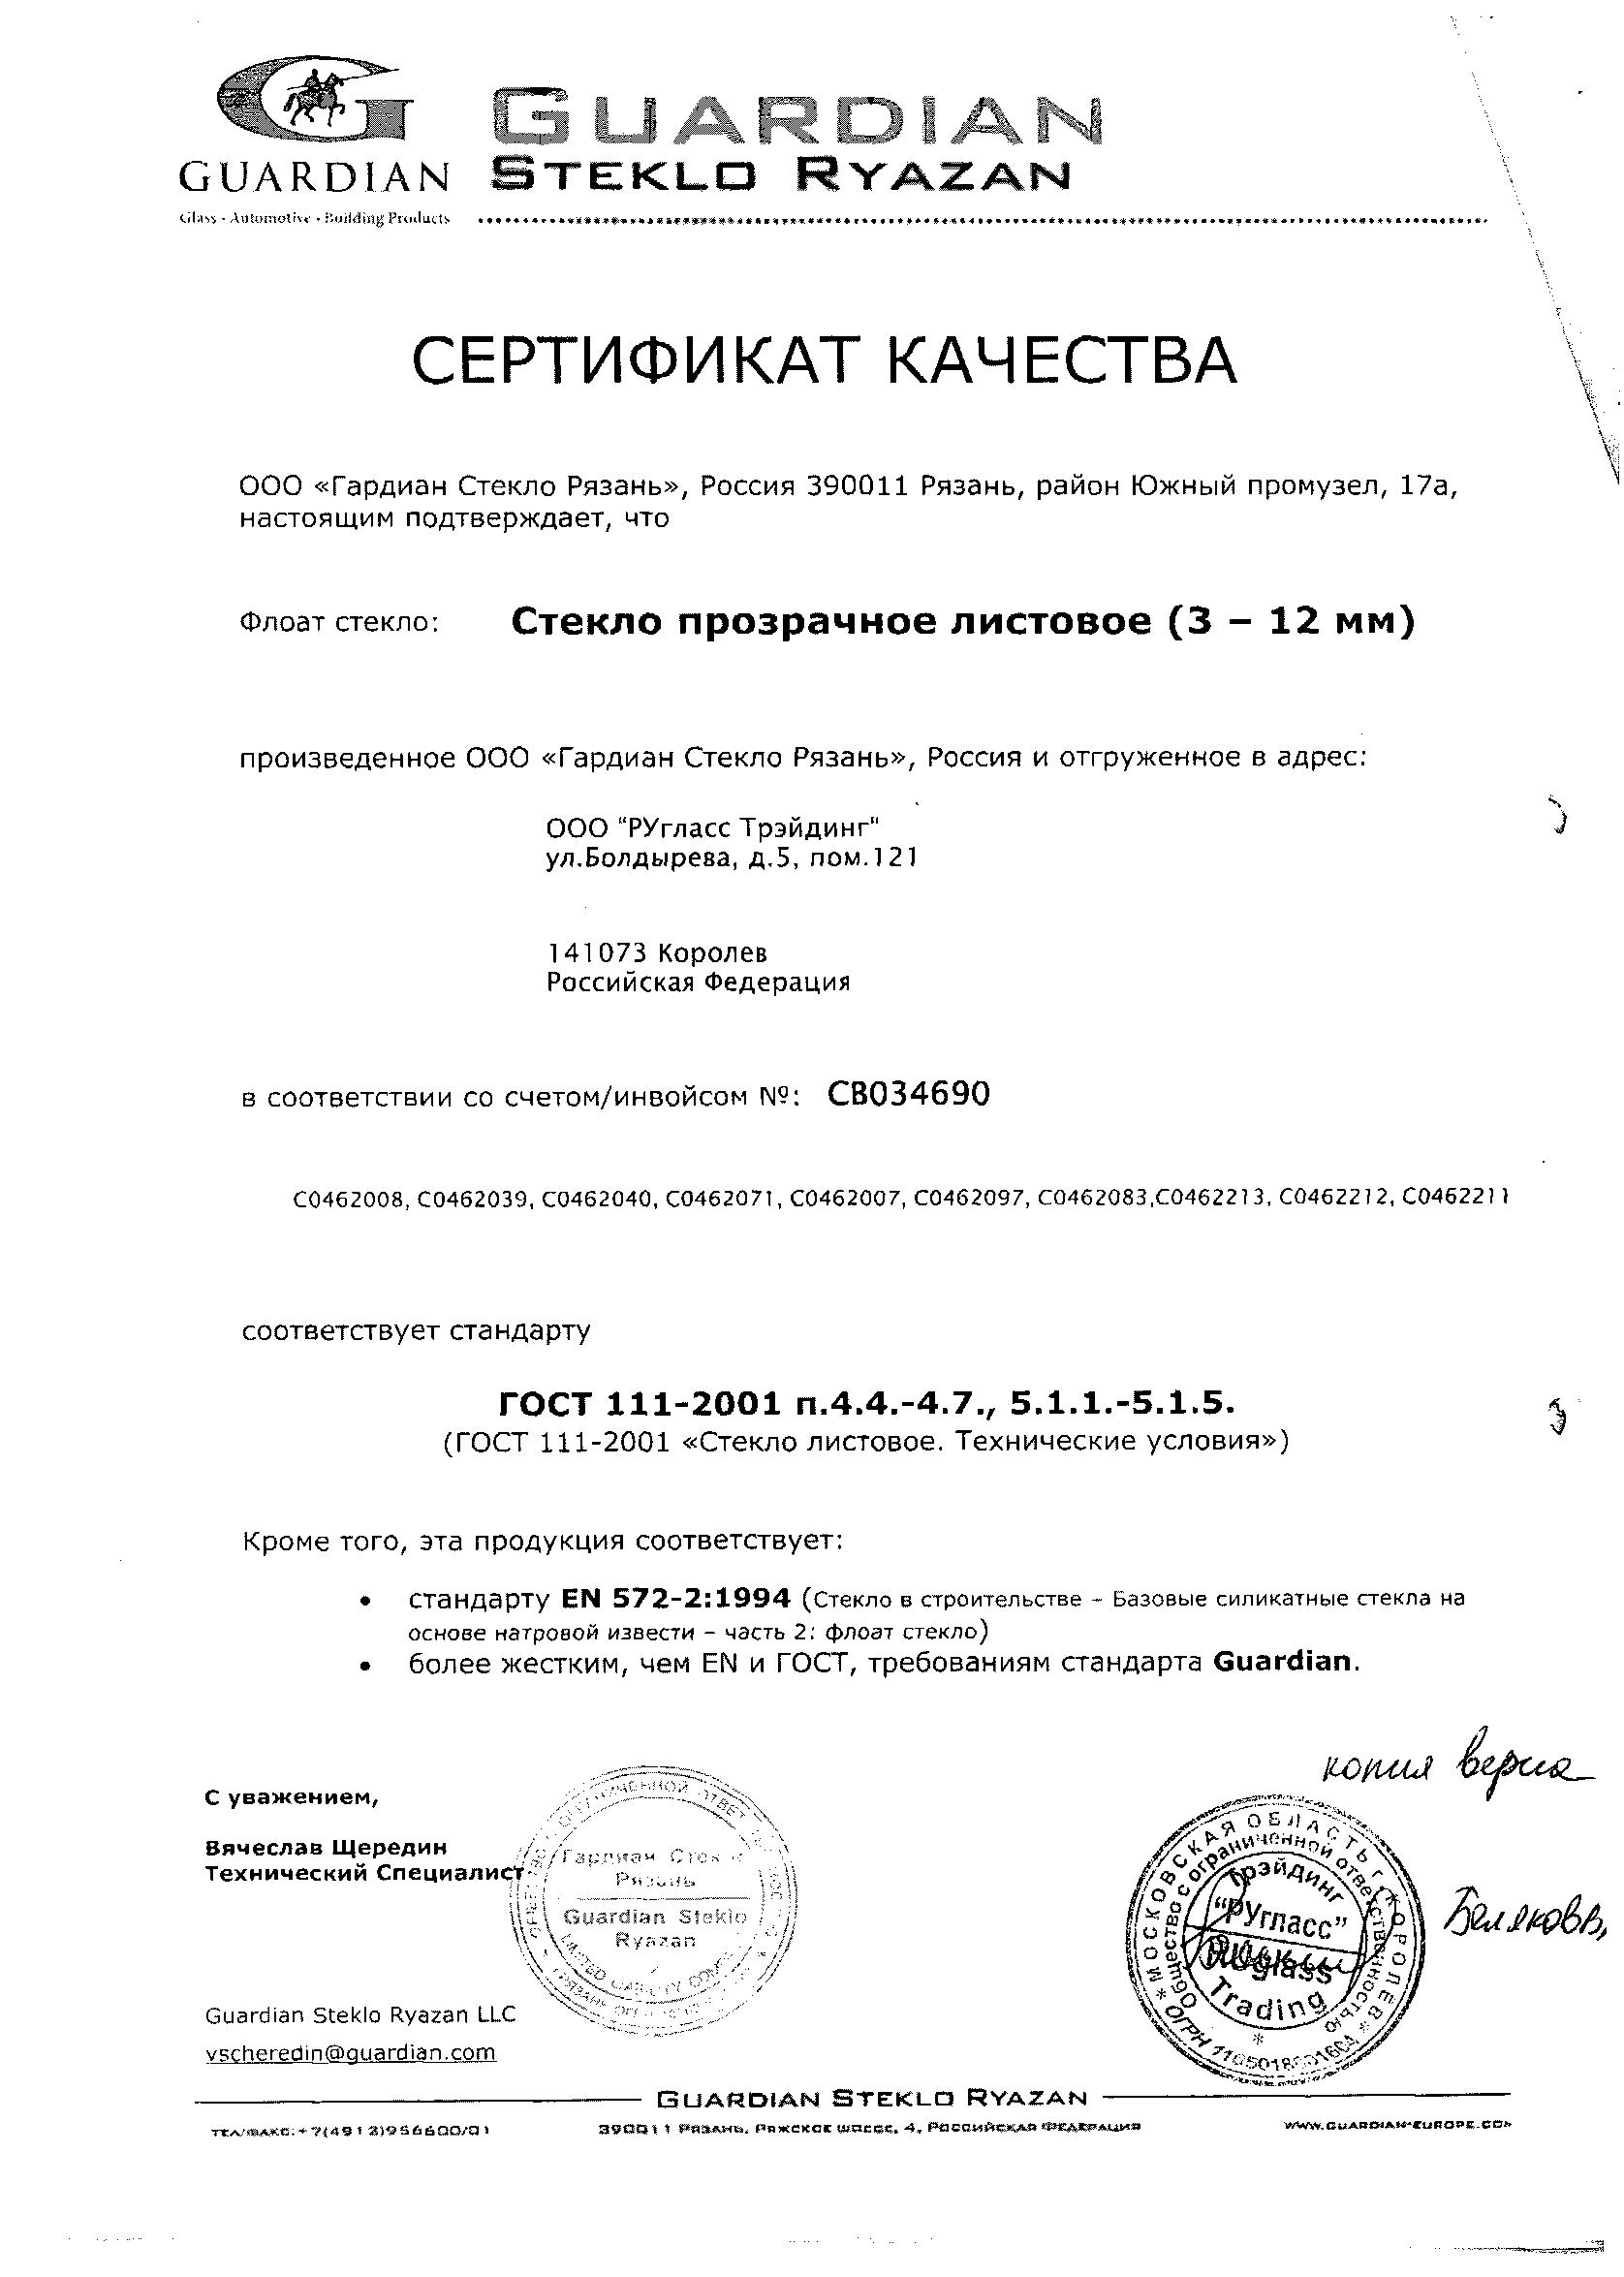 sertif_sootvetstvia1